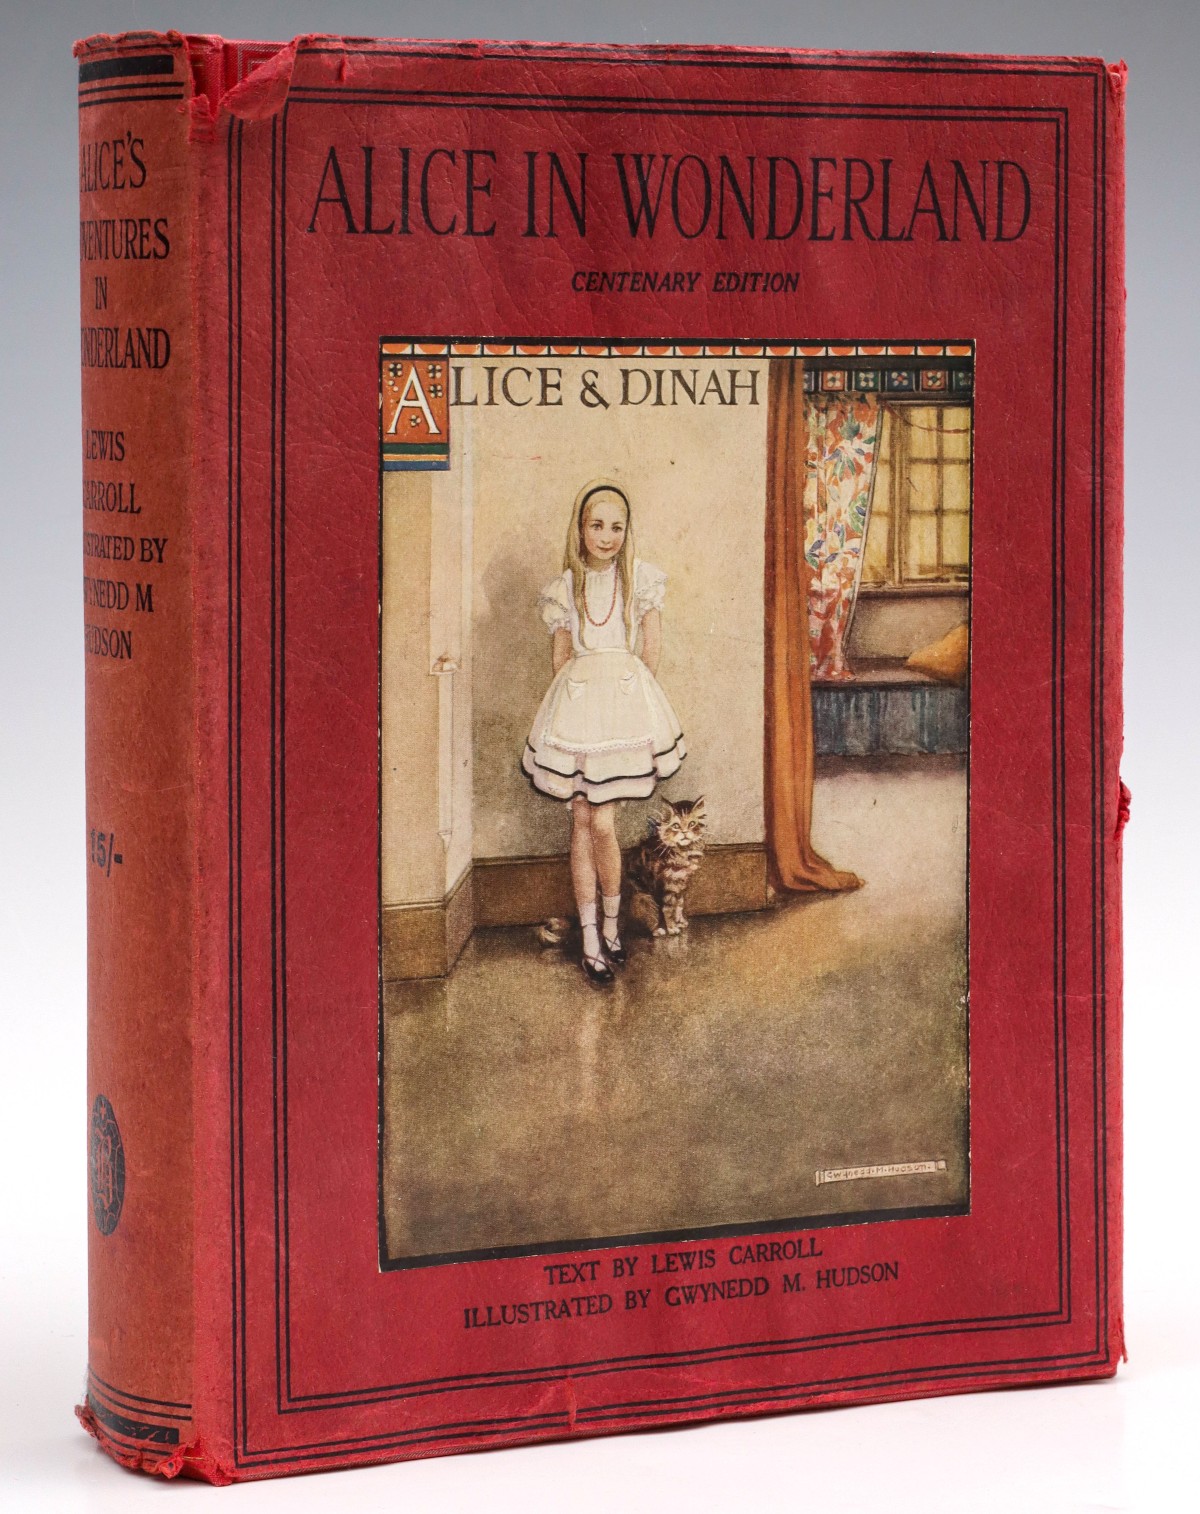 ALICE IN WONDERLAND CENTENARY EDITION